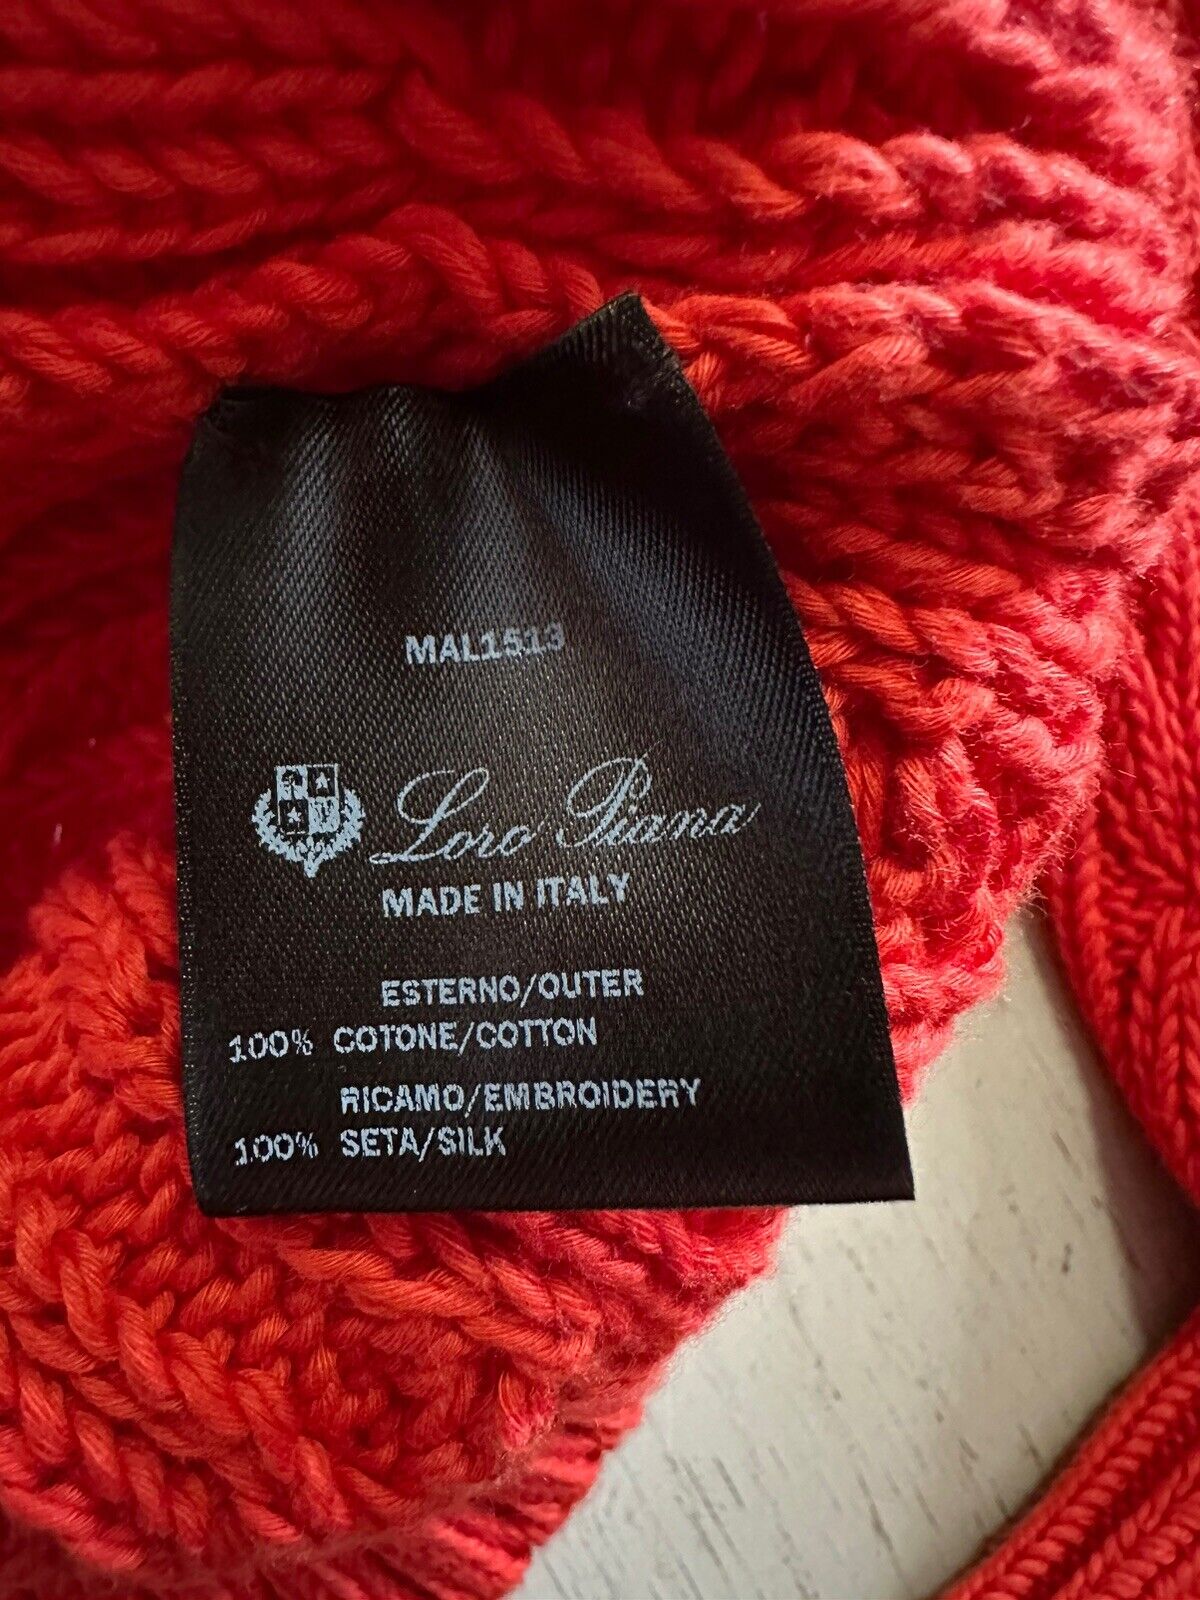 Loro Piana Women Valencia Cabled Cotton Sweater Orange Size XS Italy $3350